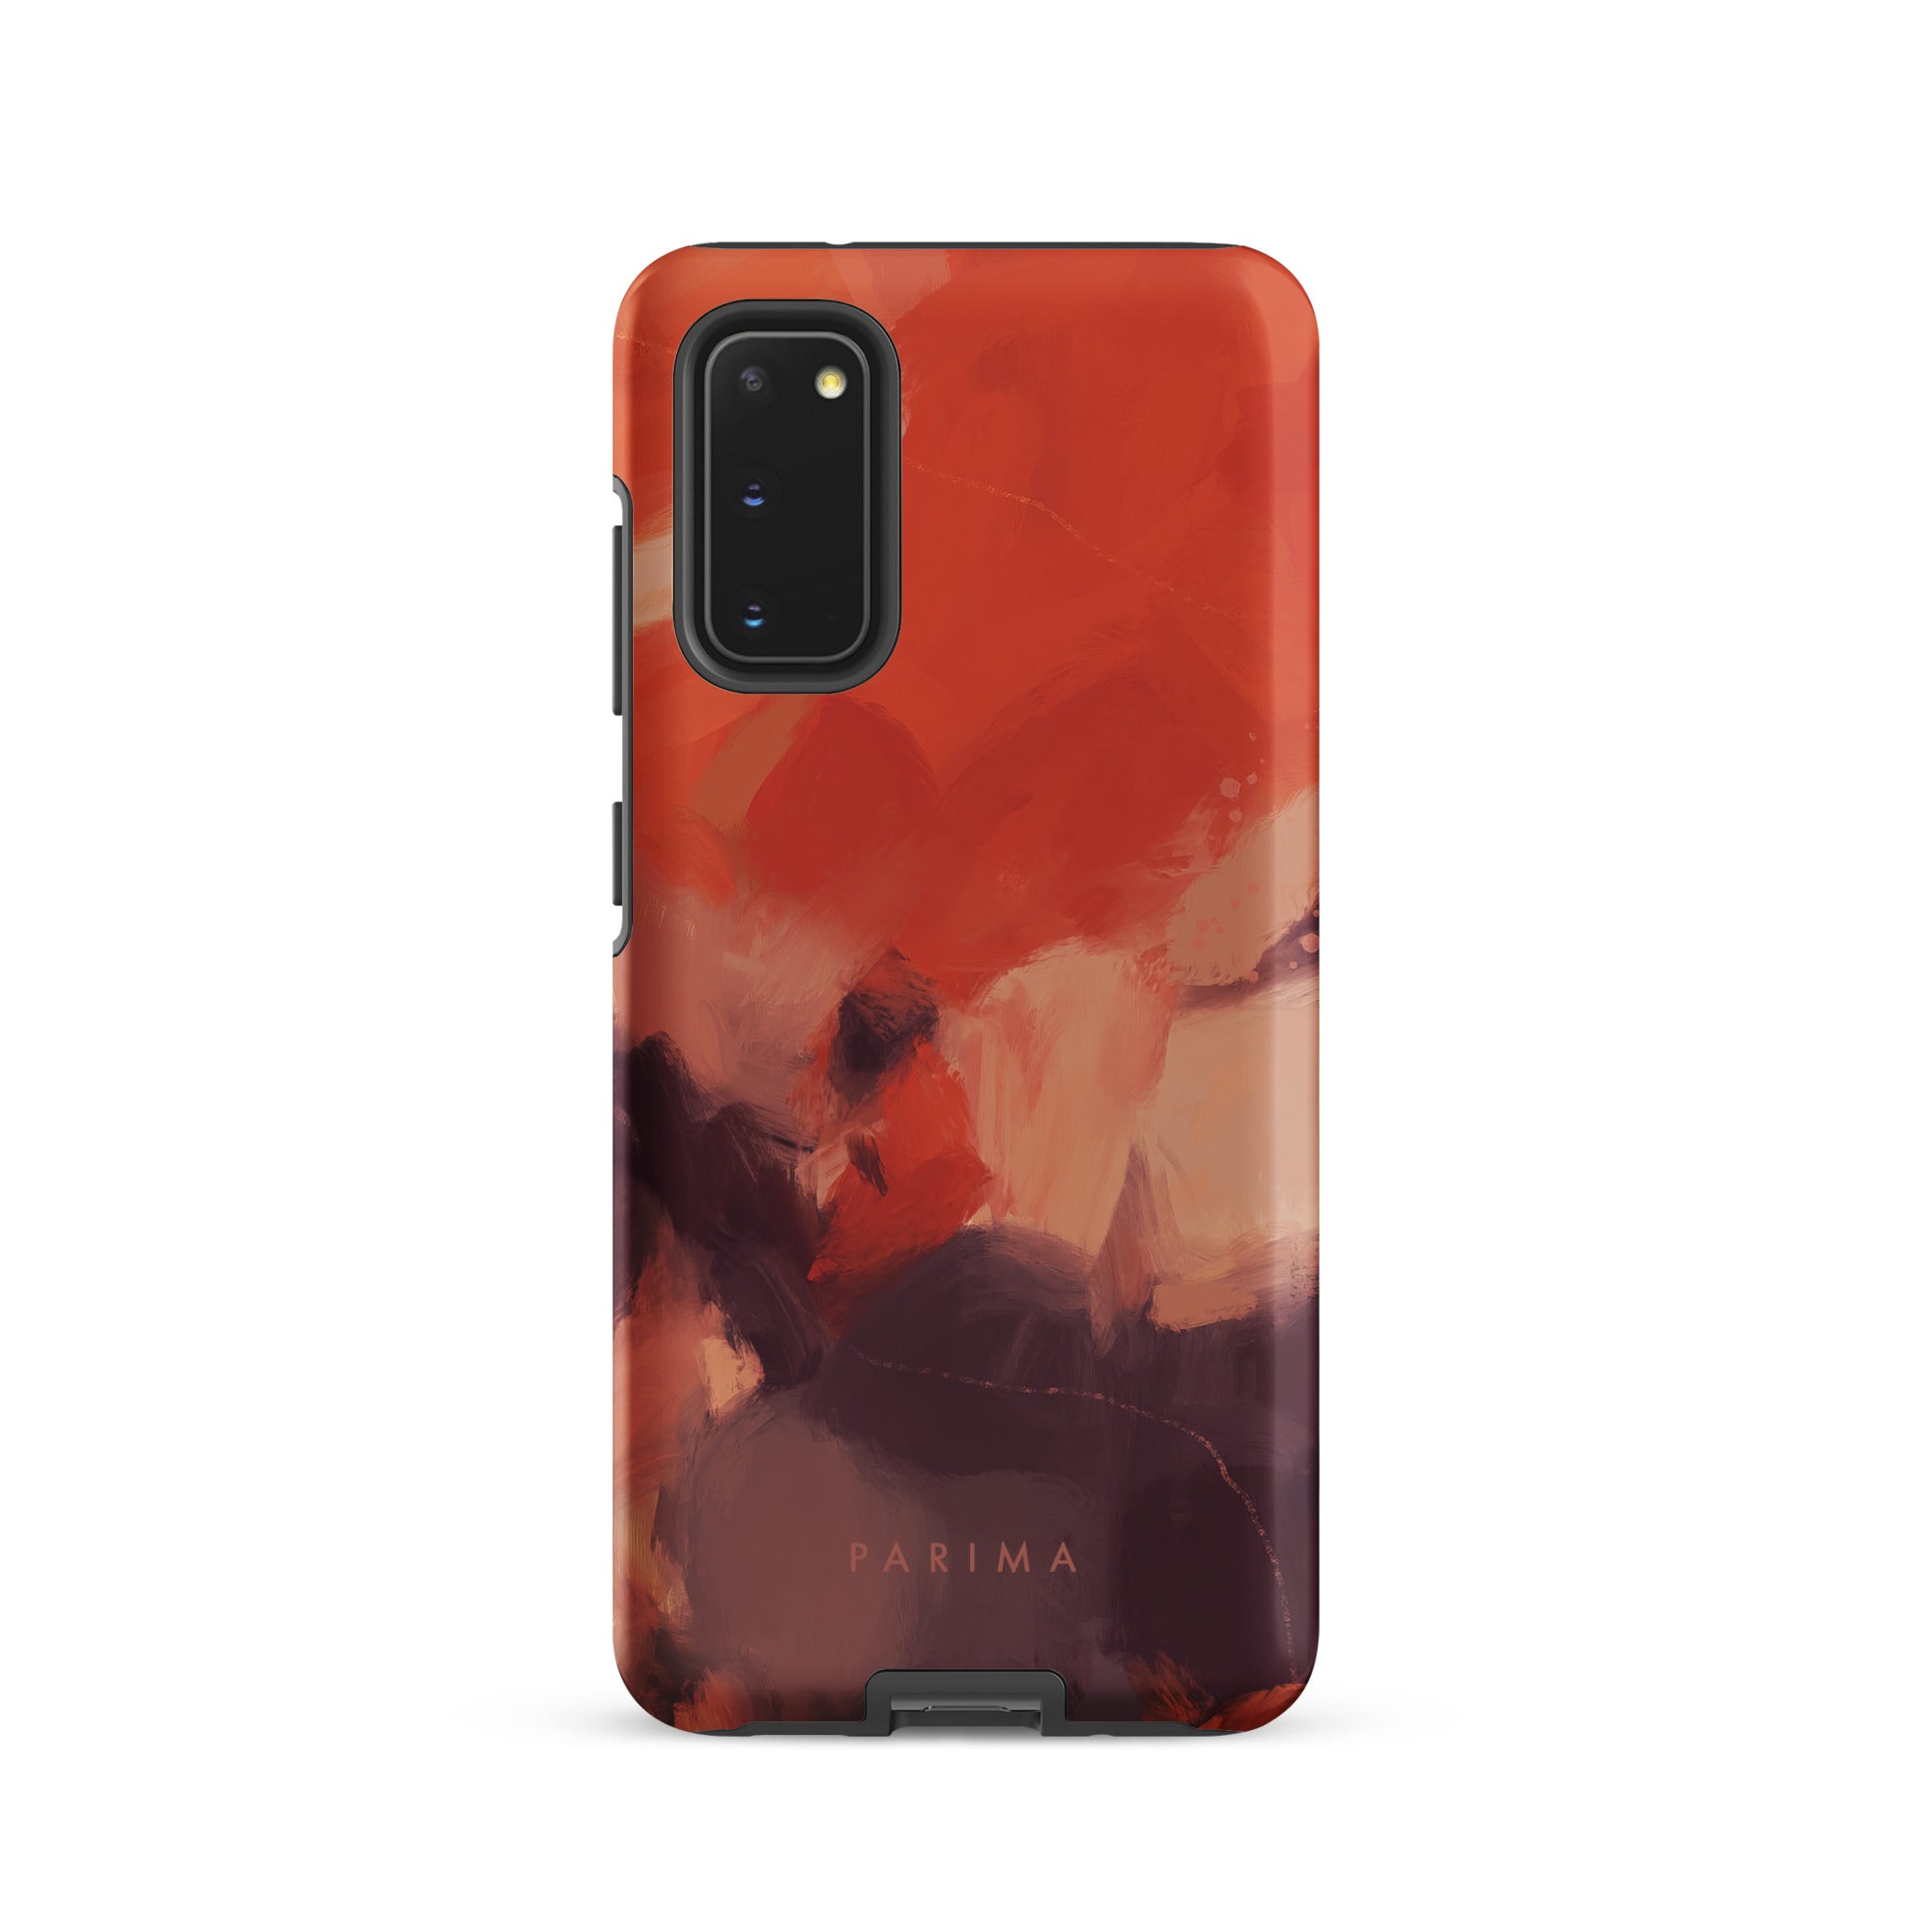 Autumn, orange and purple abstract art on Samsung Galaxy S20 tough case by Parima Studio